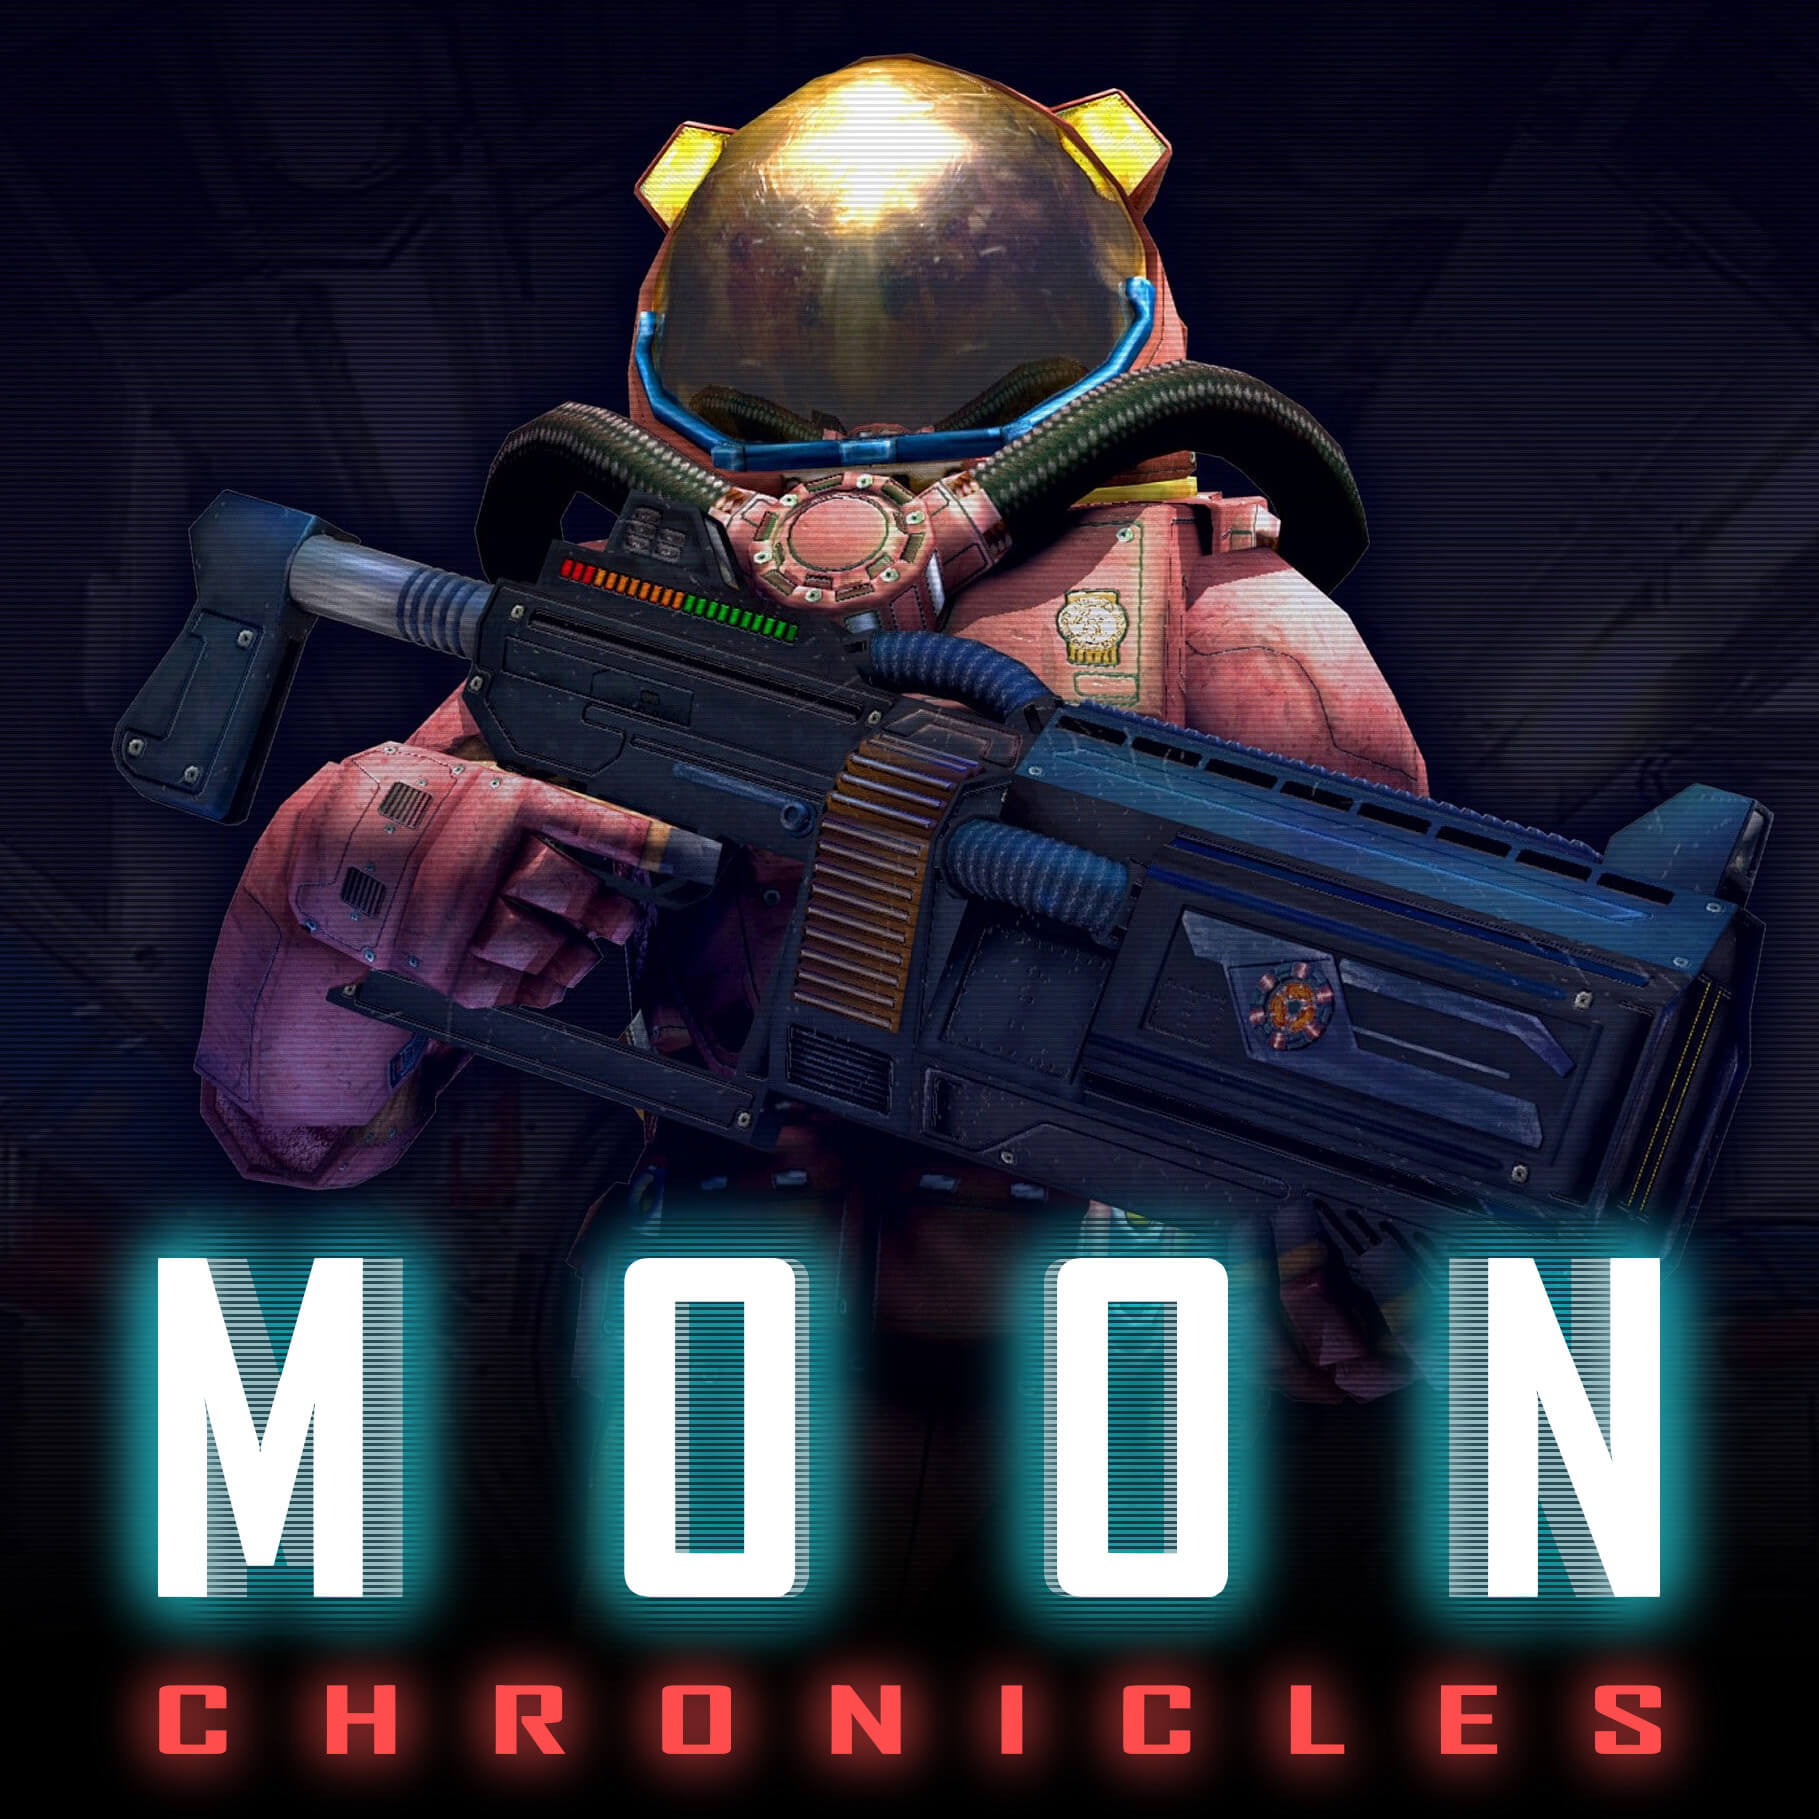 Moon Chronicles